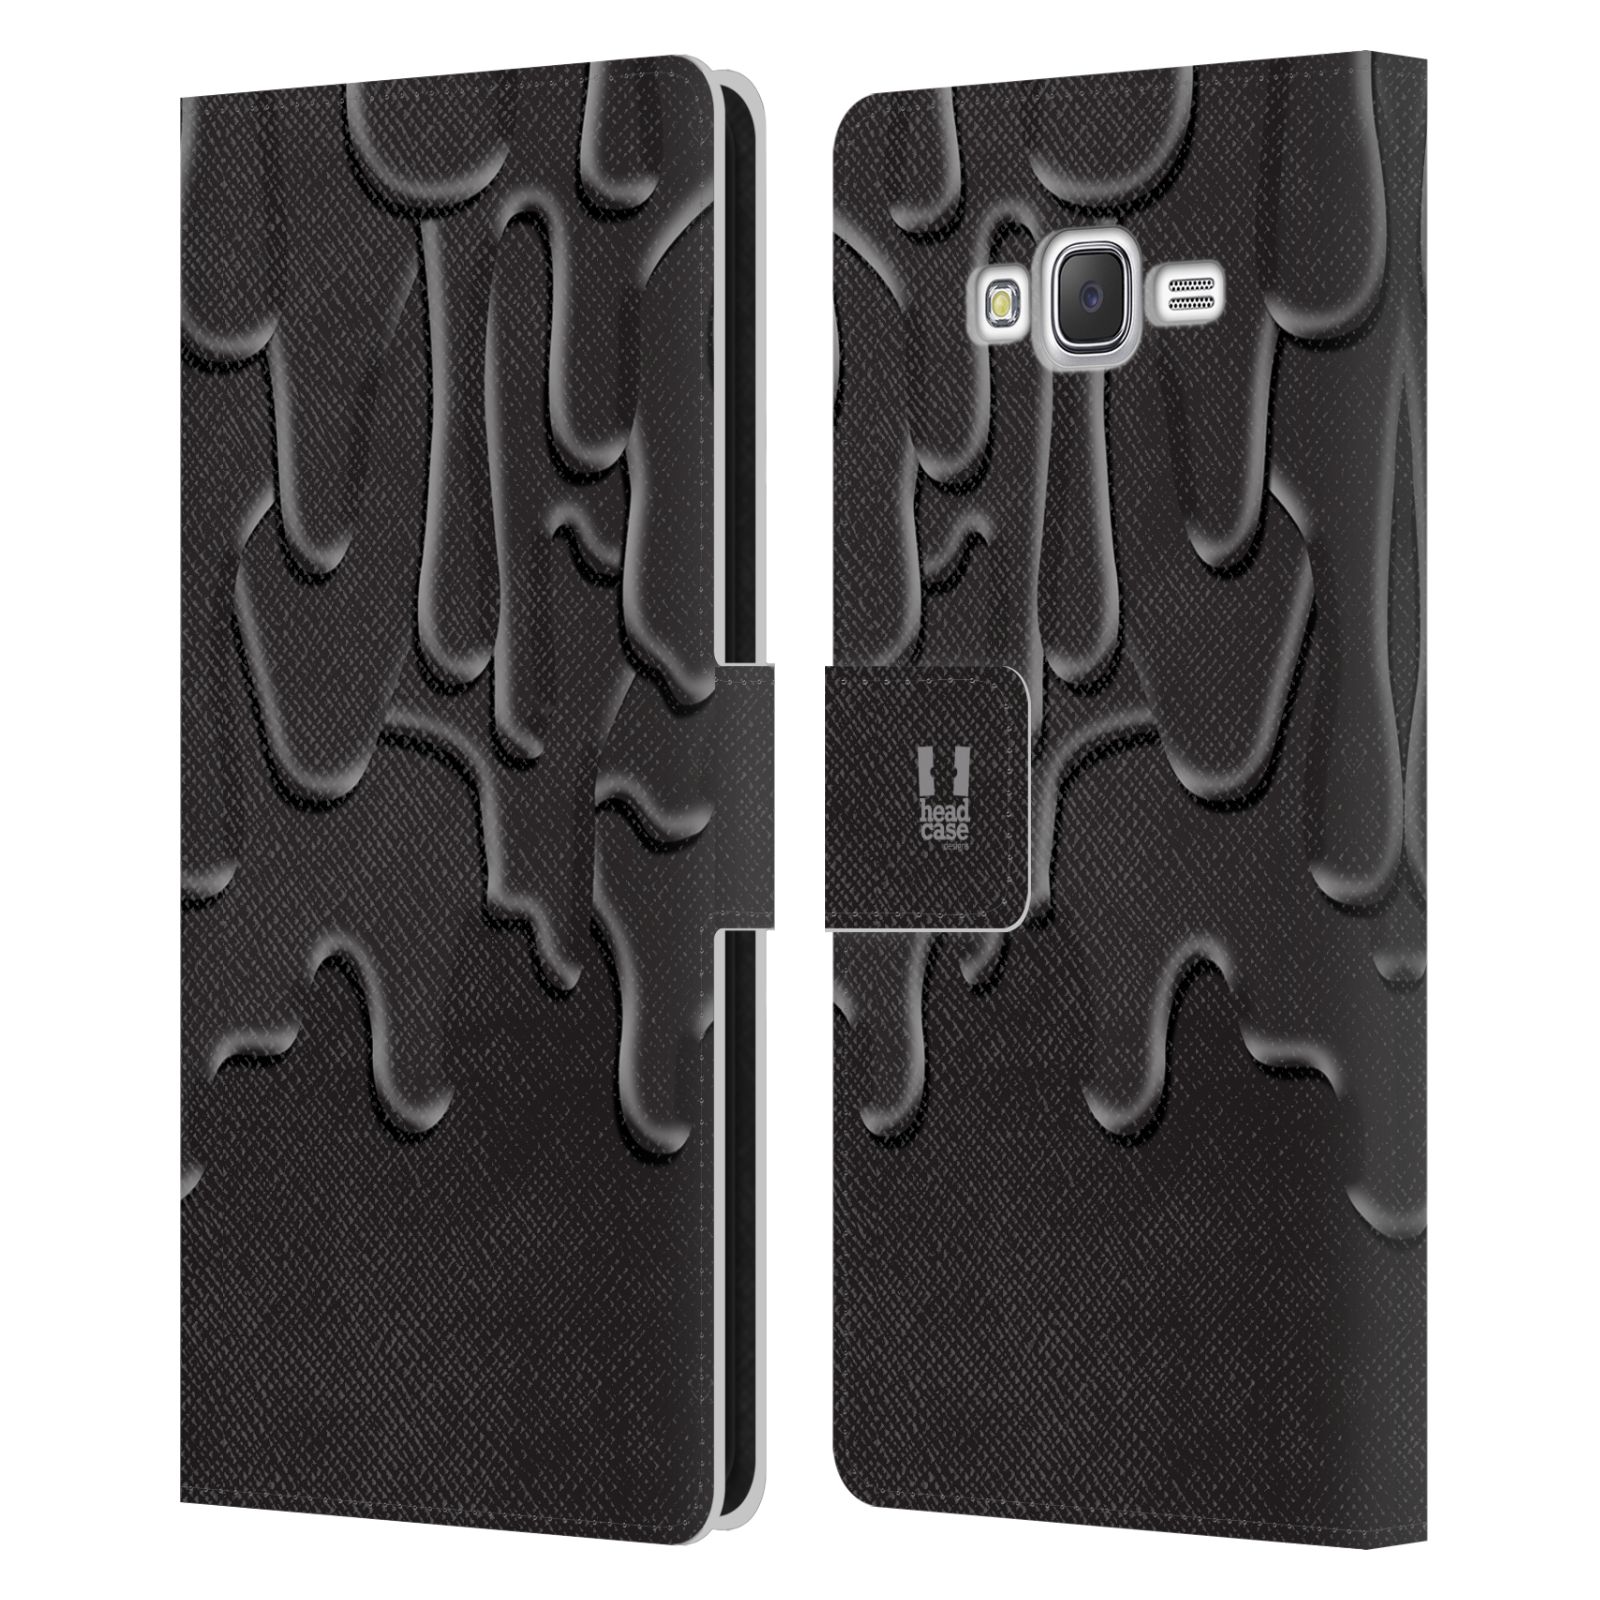 HEAD CASE Flipové pouzdro pro mobil Samsung Galaxy J7, J700 ZÁPLAVA BARVA černá